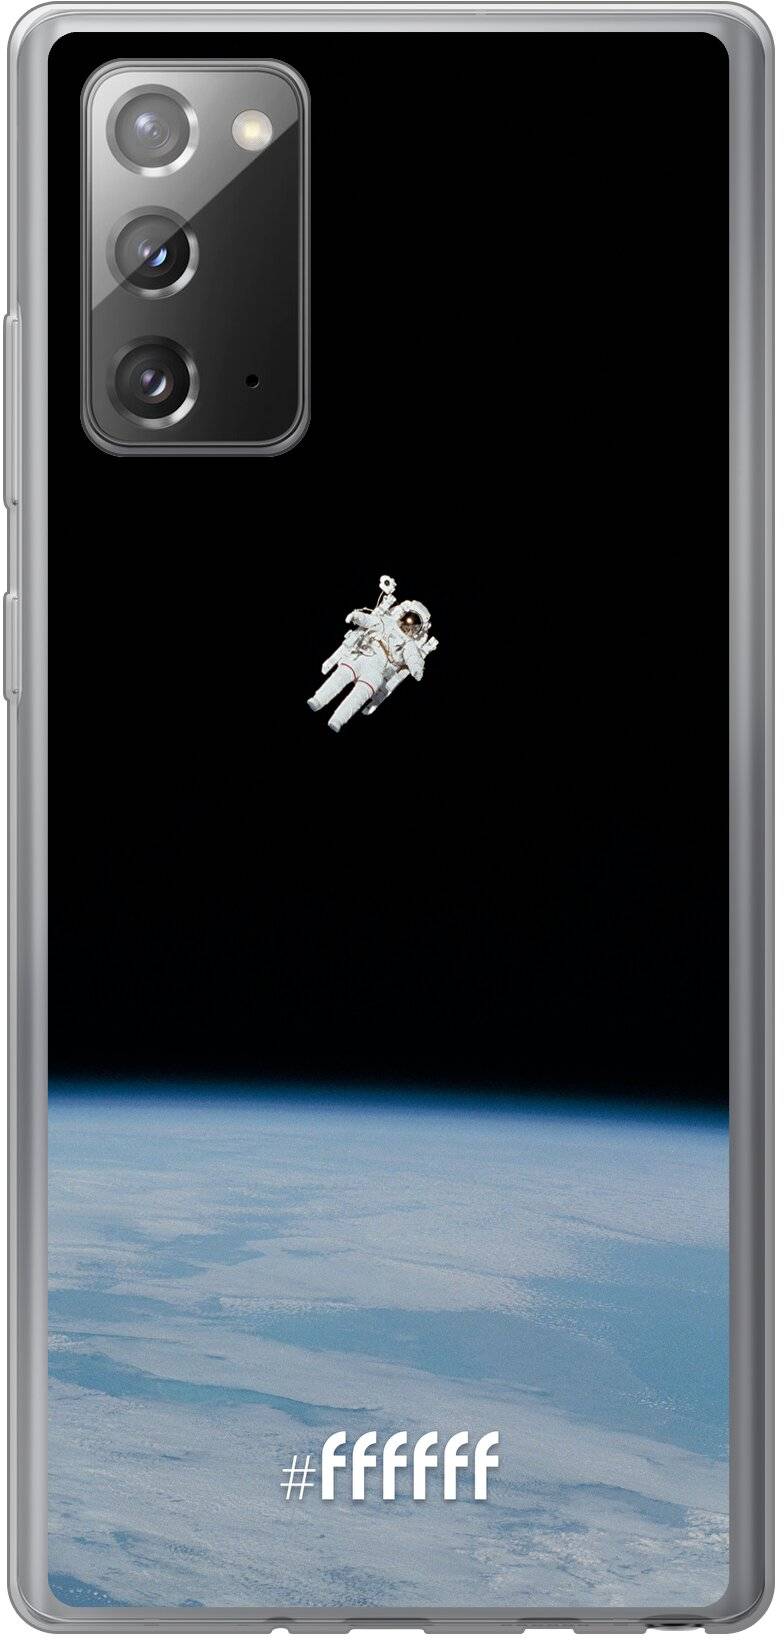 Spacewalk Galaxy Note 20